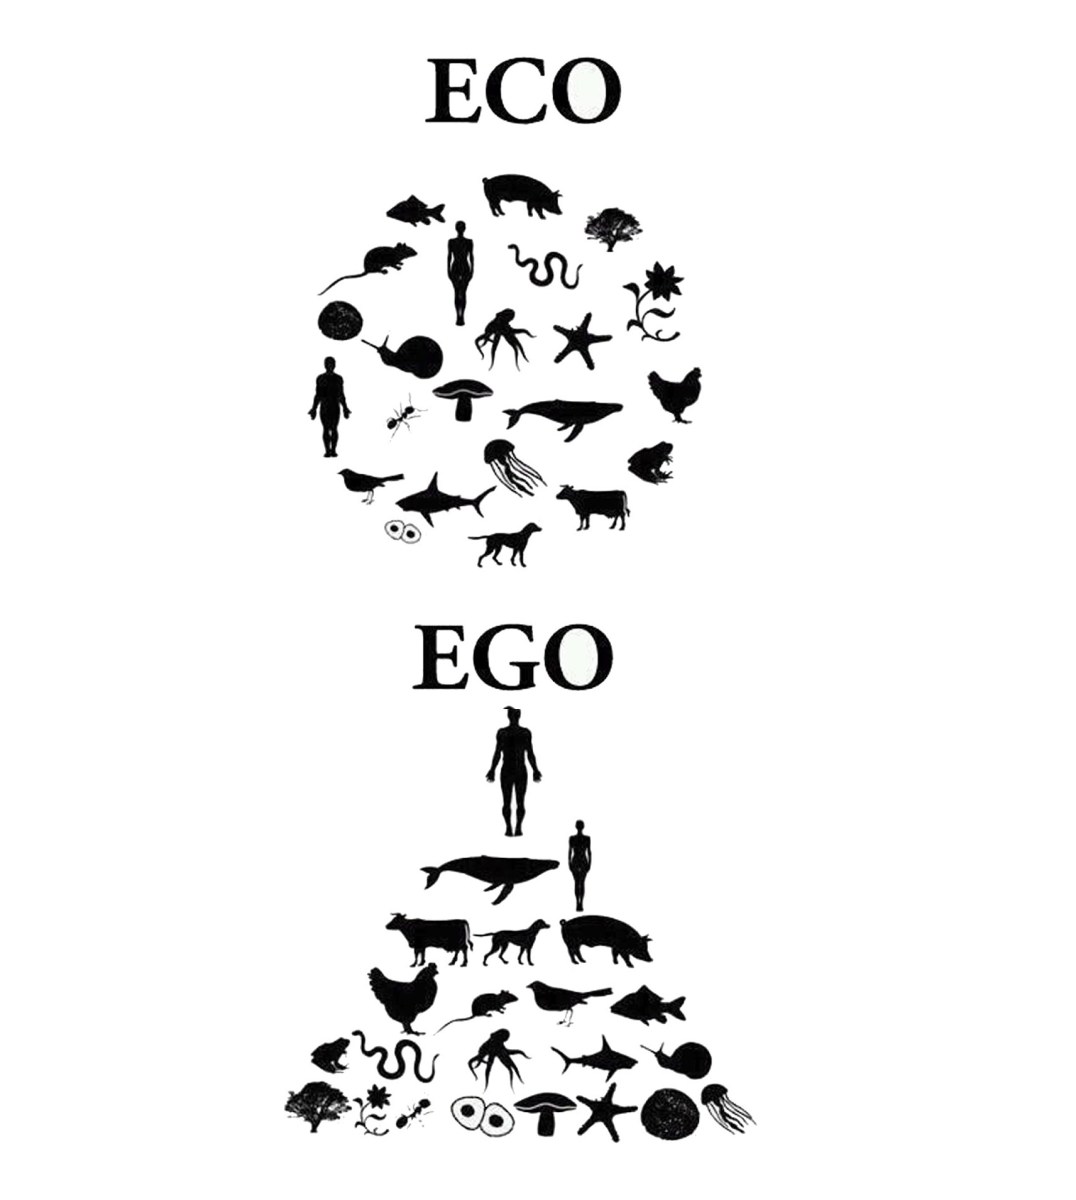 eco-ego.jpg?fit=1200,1200